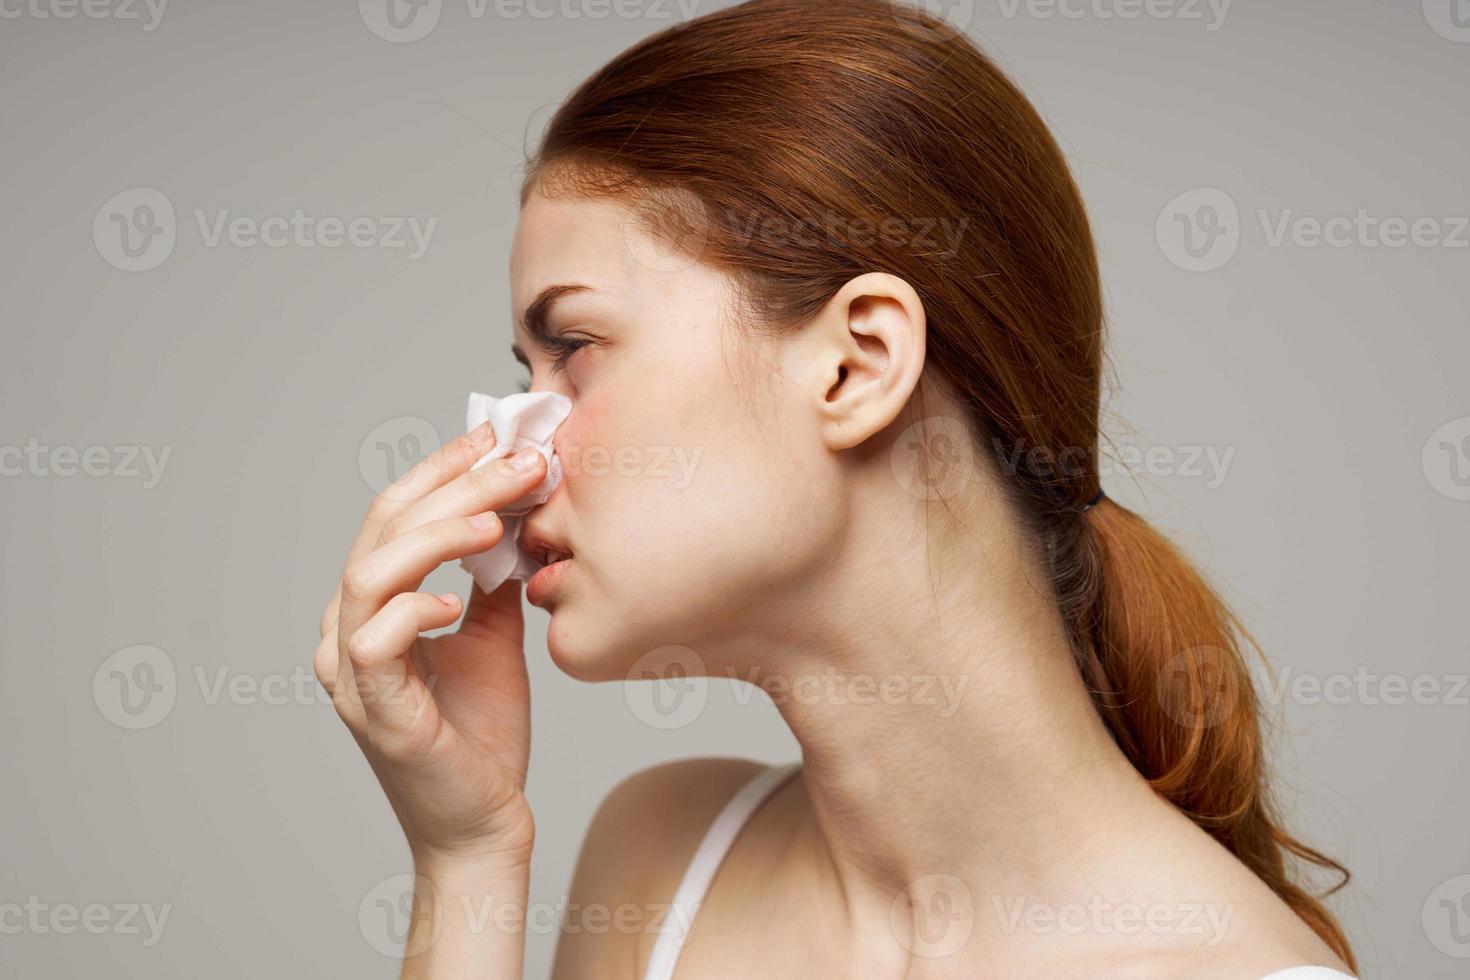 sick woman flu infection virus health problems close-up photo